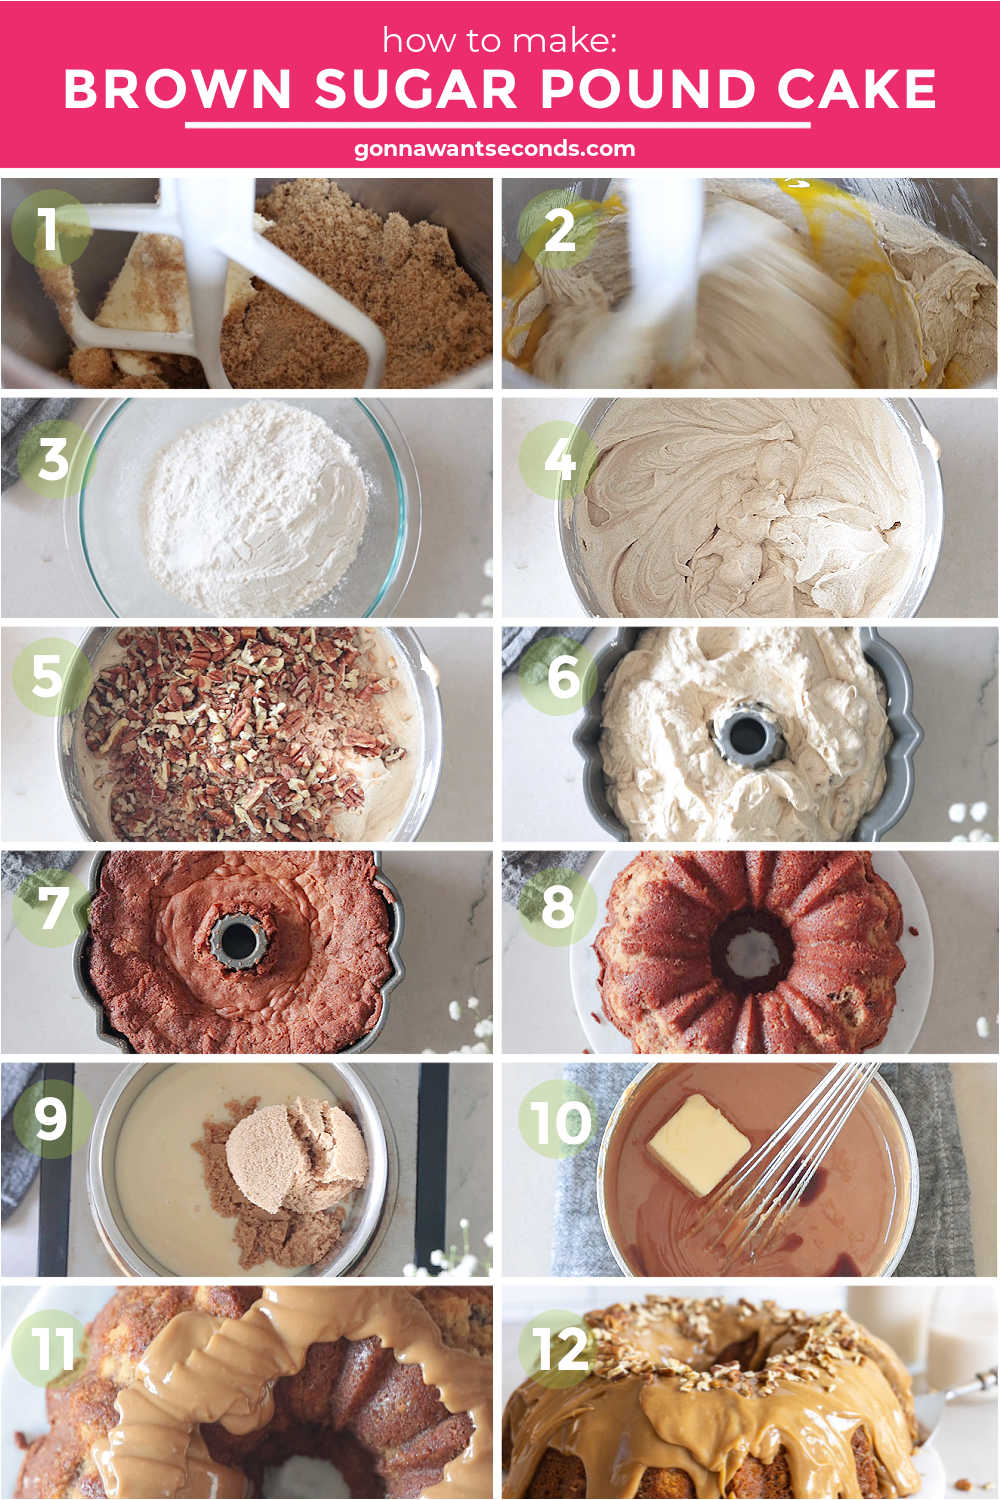 Step by step how to make brown sugar pound cake